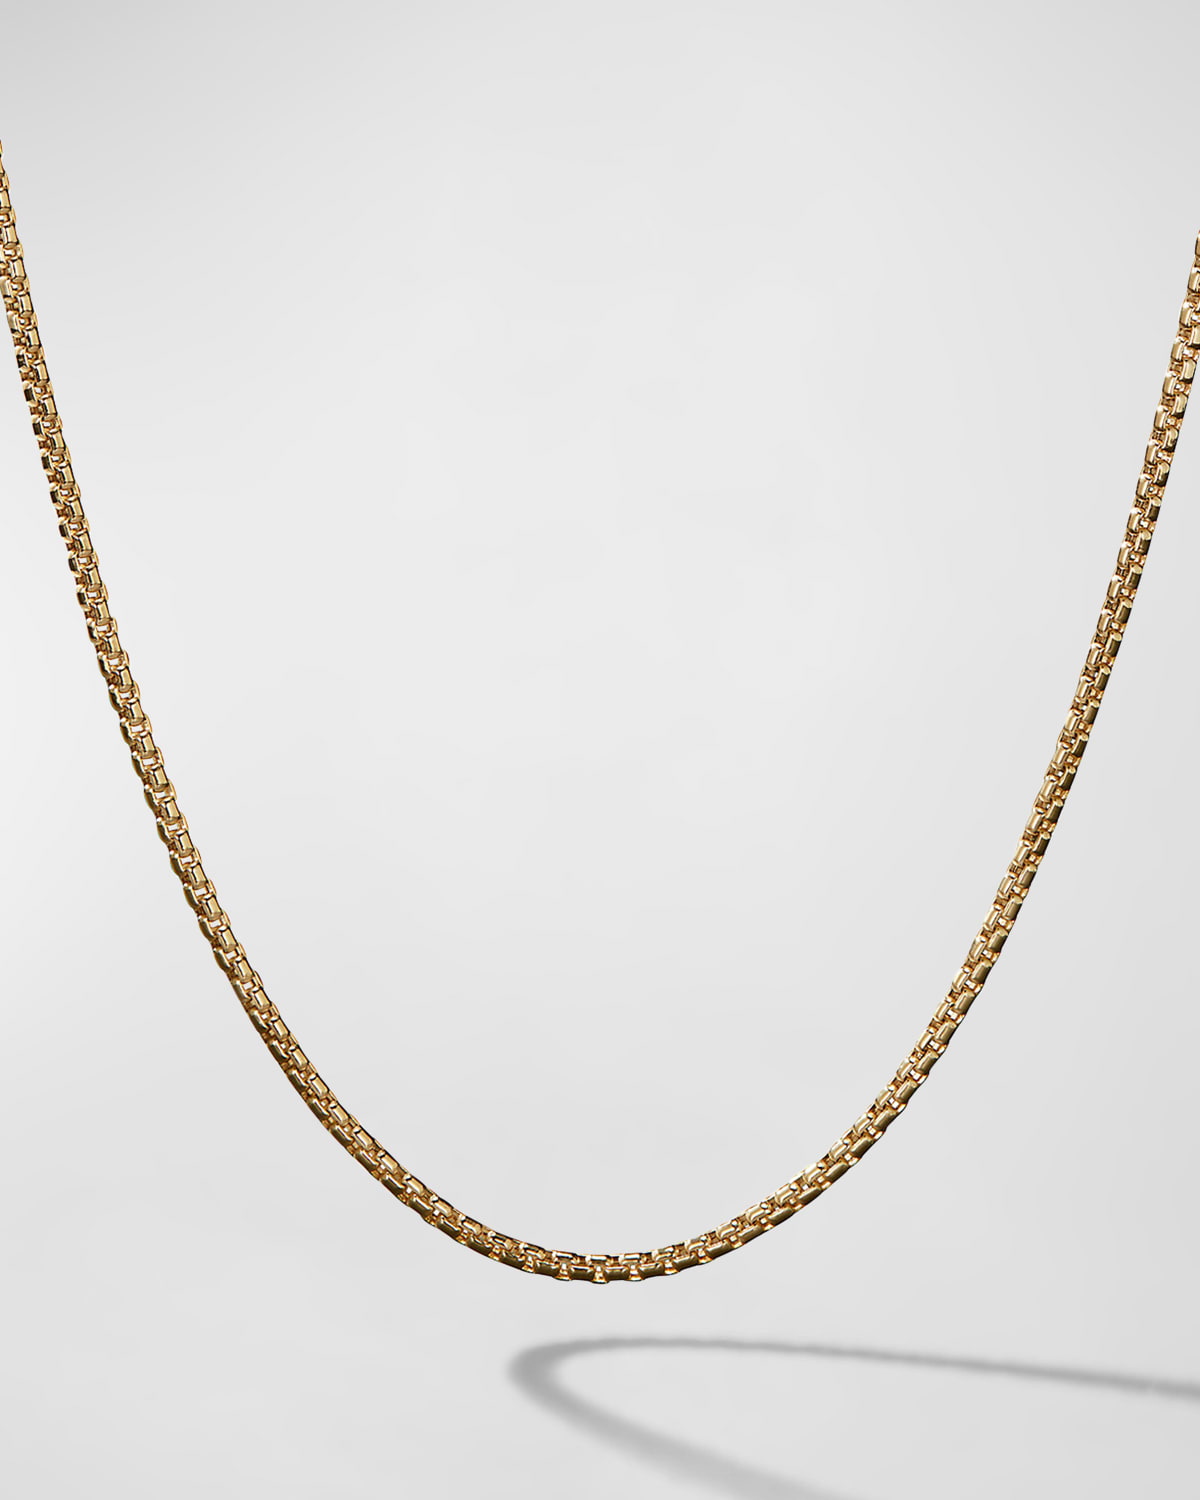 David Yurman Men's Box Chain Necklace In 18k Gold, 1.7mm, 24"l